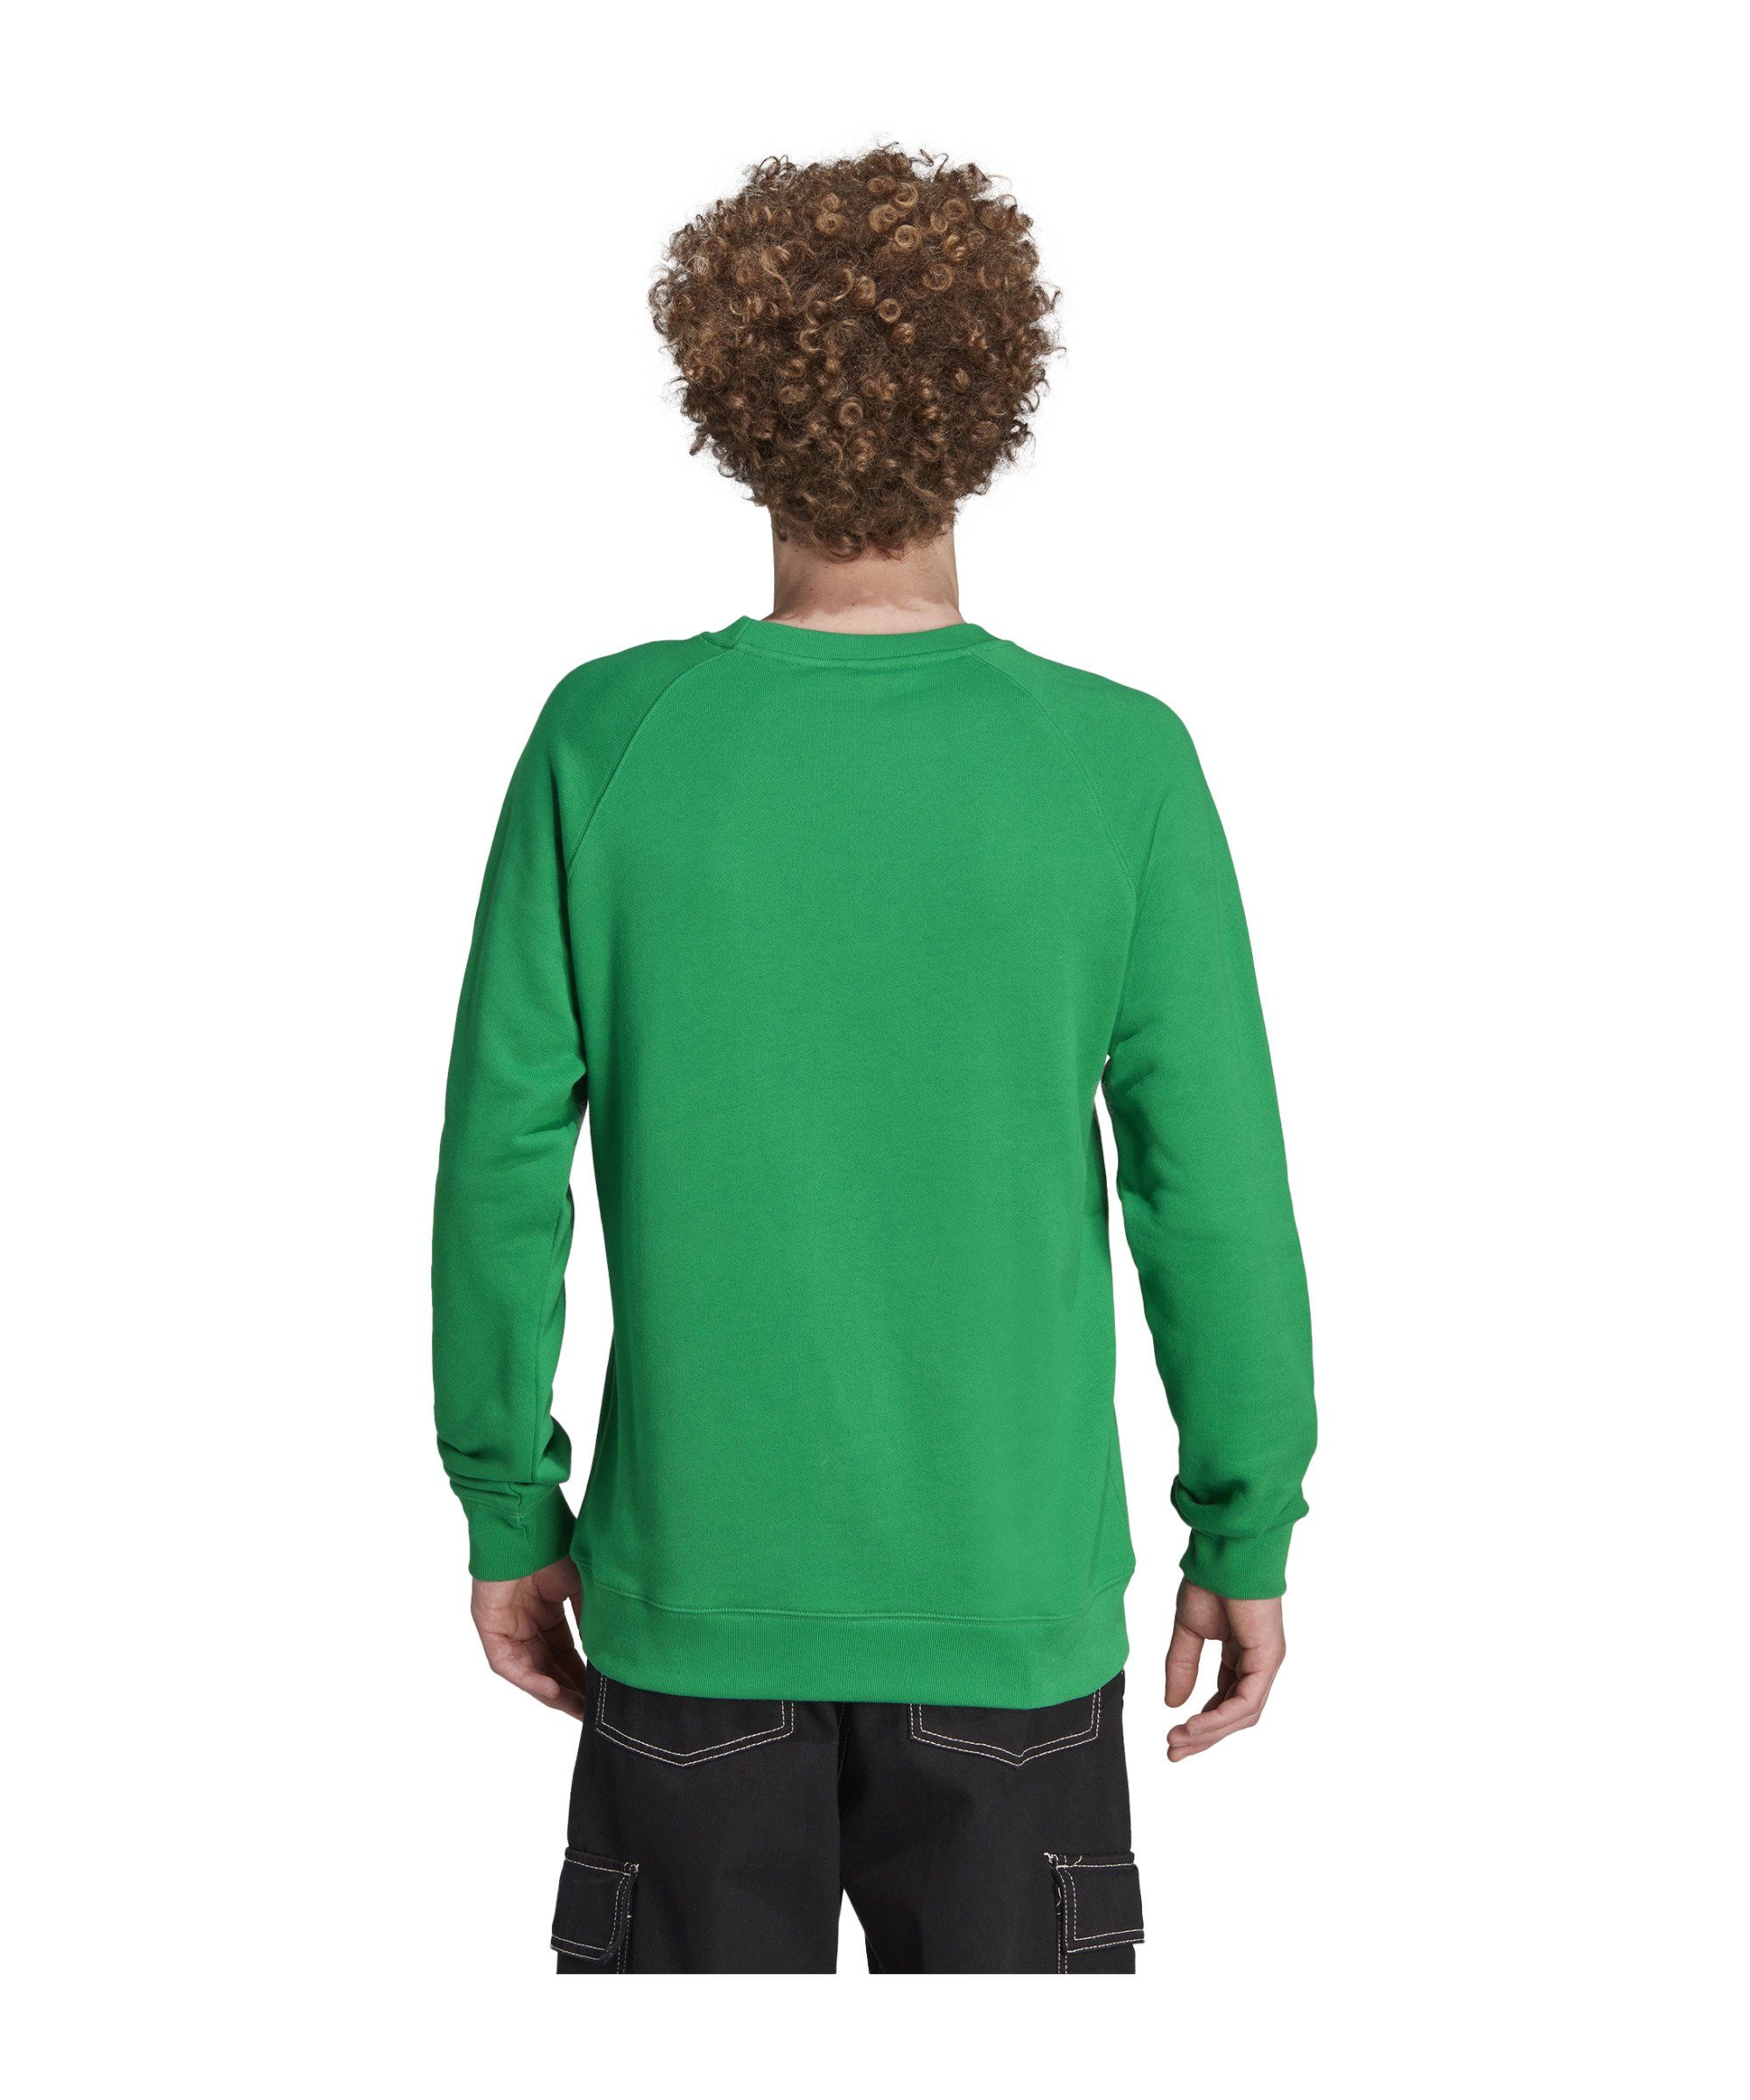 Sweatshirt Originals Trefoil Sweatshirt Crew adidas